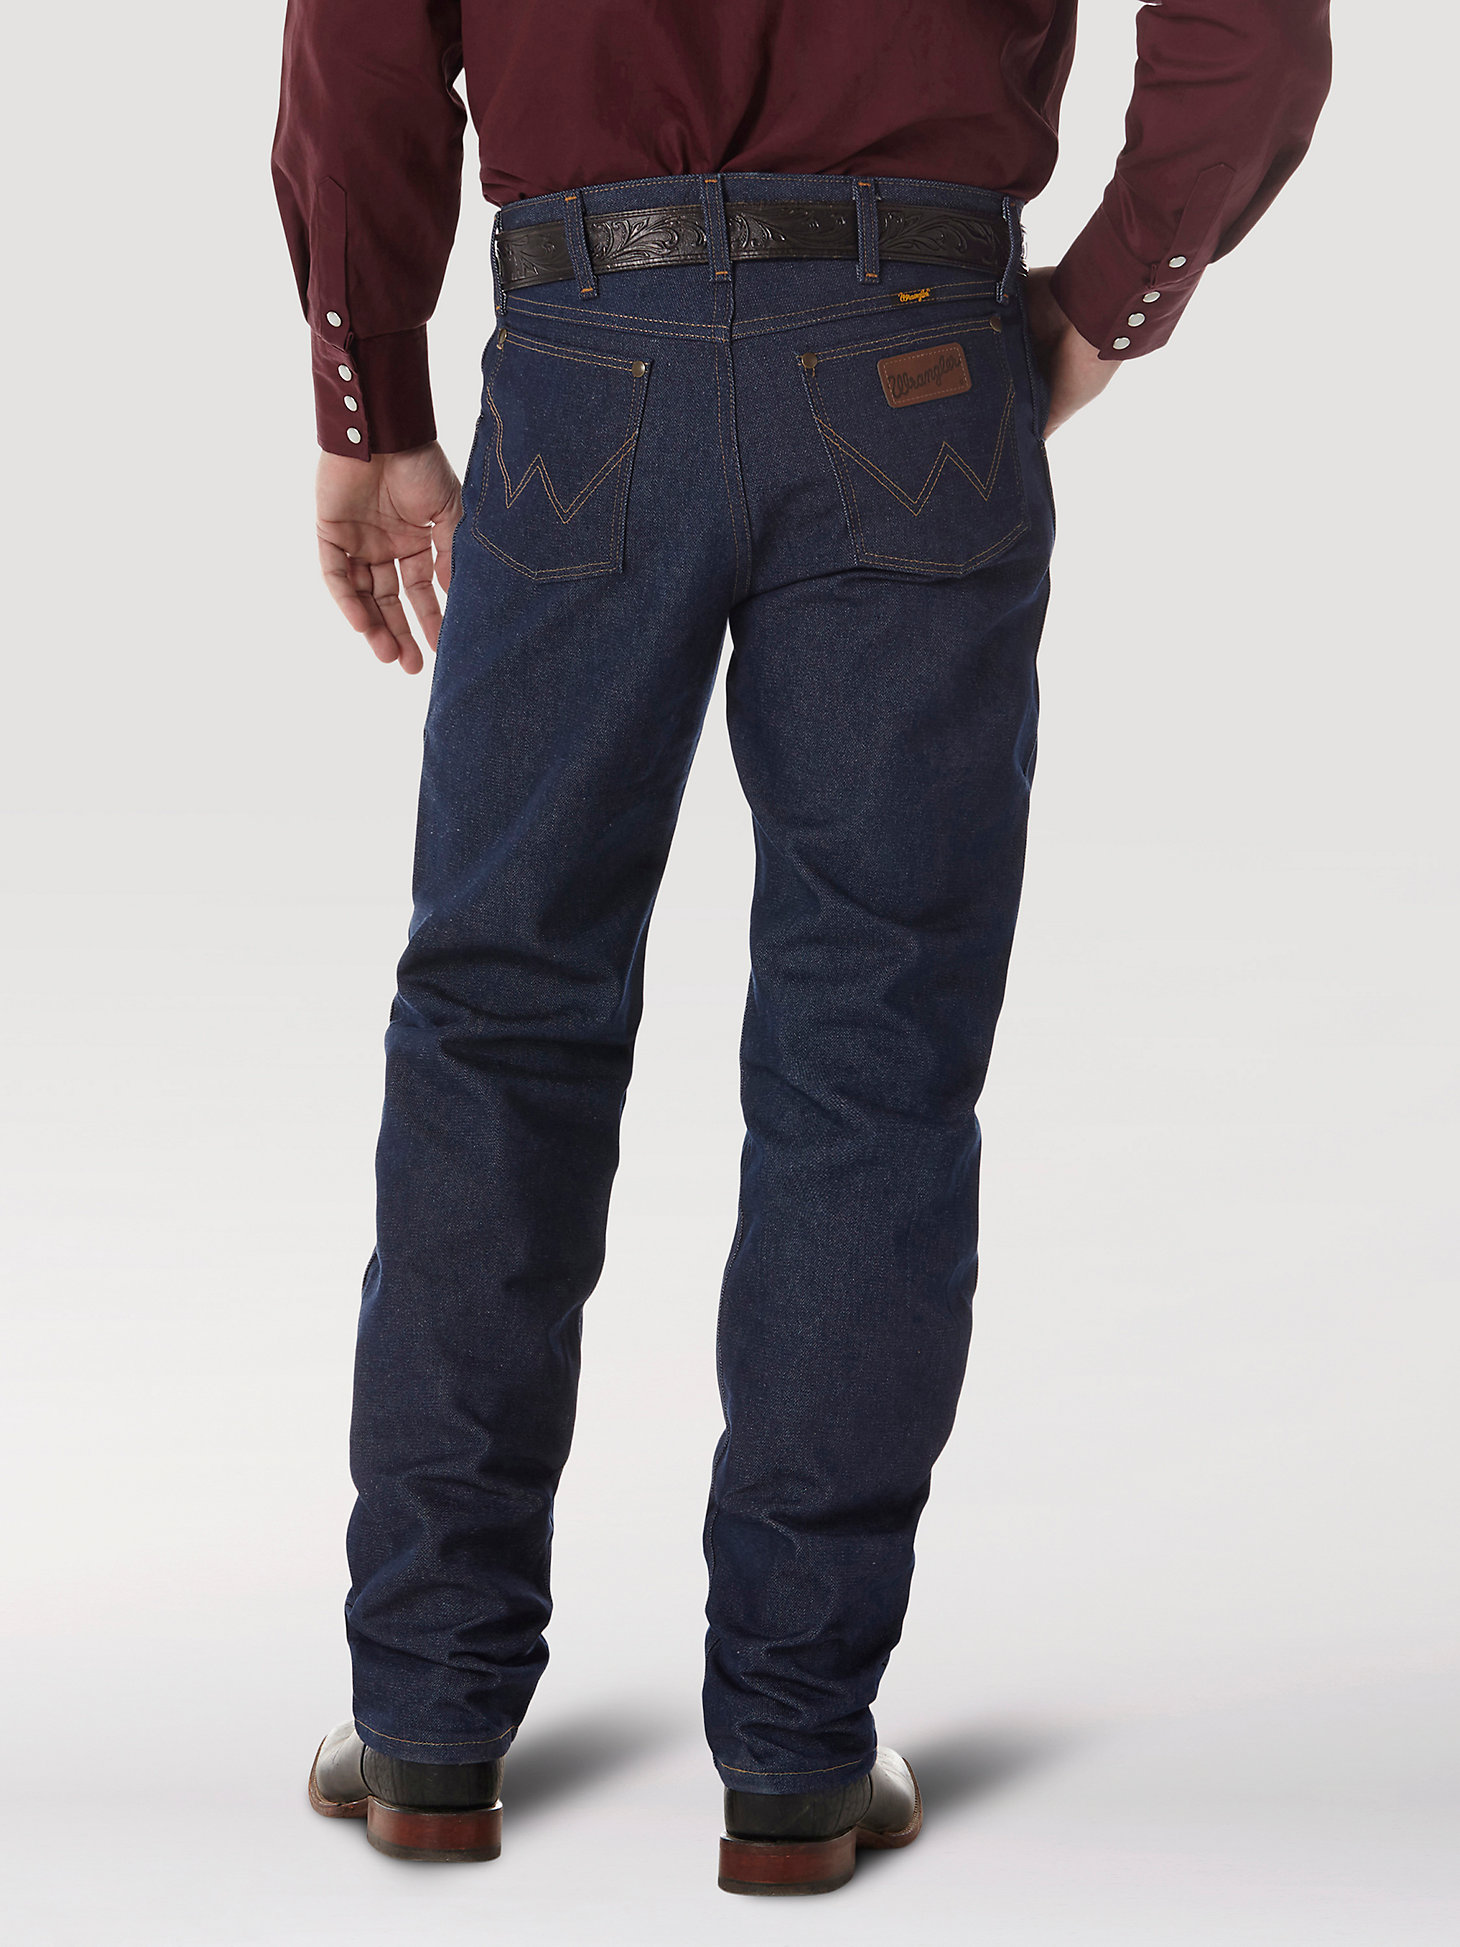 Rigid Premium Performance Cowboy Cut® Regular Fit Jean in Rigid